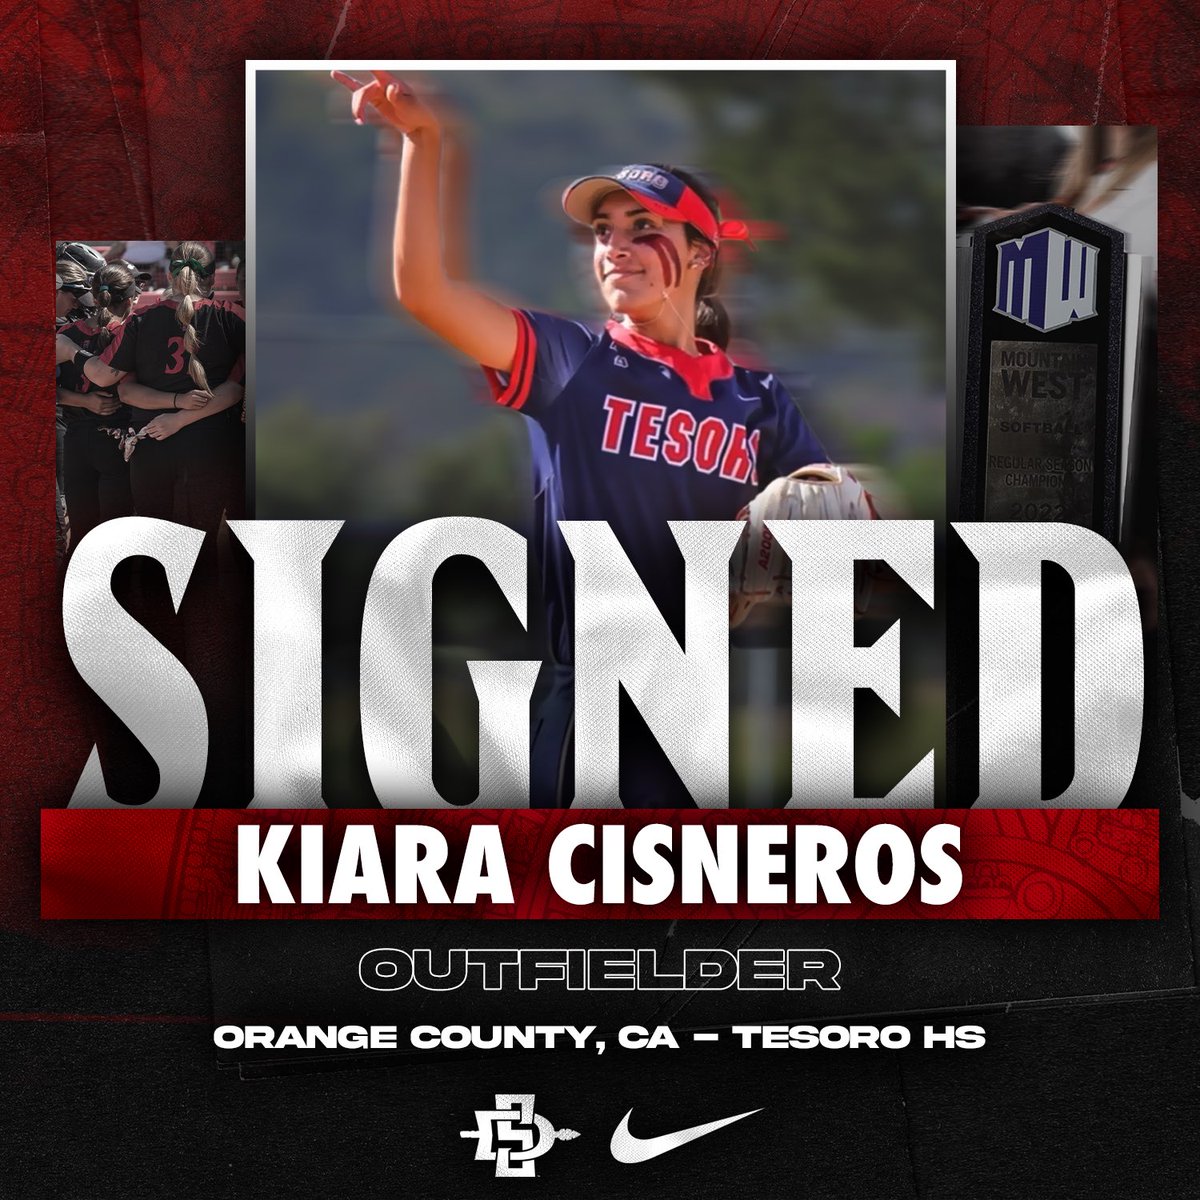 Signed ✍🏼 Outfielder, Kiara Cisneros, is officially an Aztec 🔴⚫️🌴 #GoAztecs